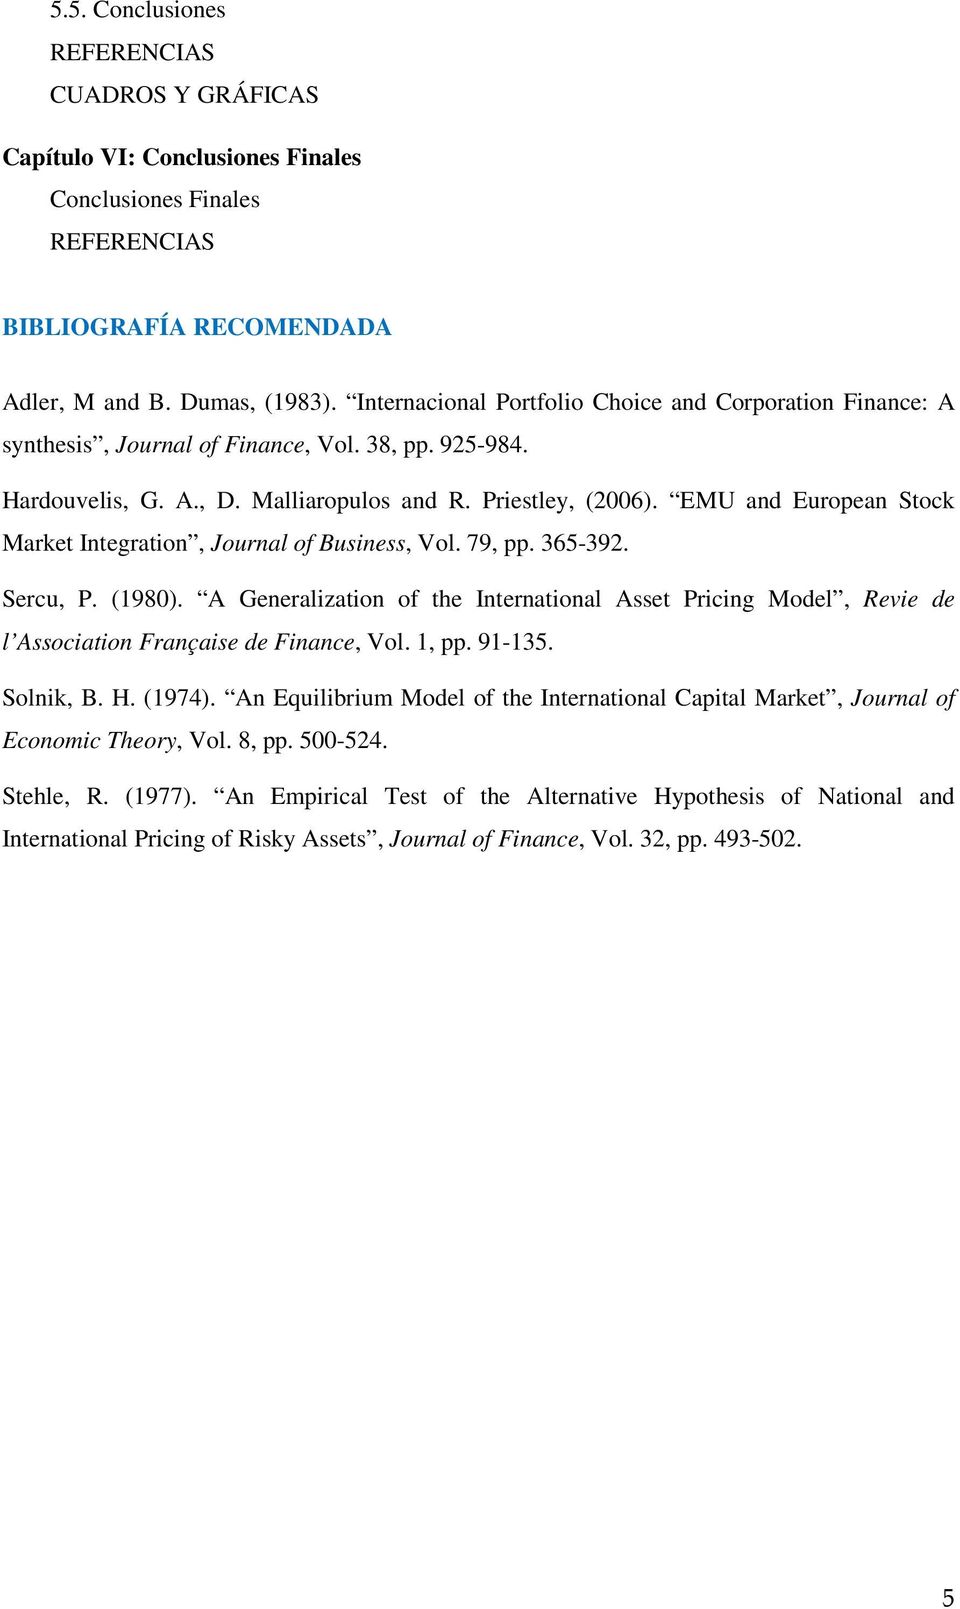 EMU and European Stock Market Integration, Journal of Business, Vol. 79, pp. 365-392. Sercu, P. (1980).